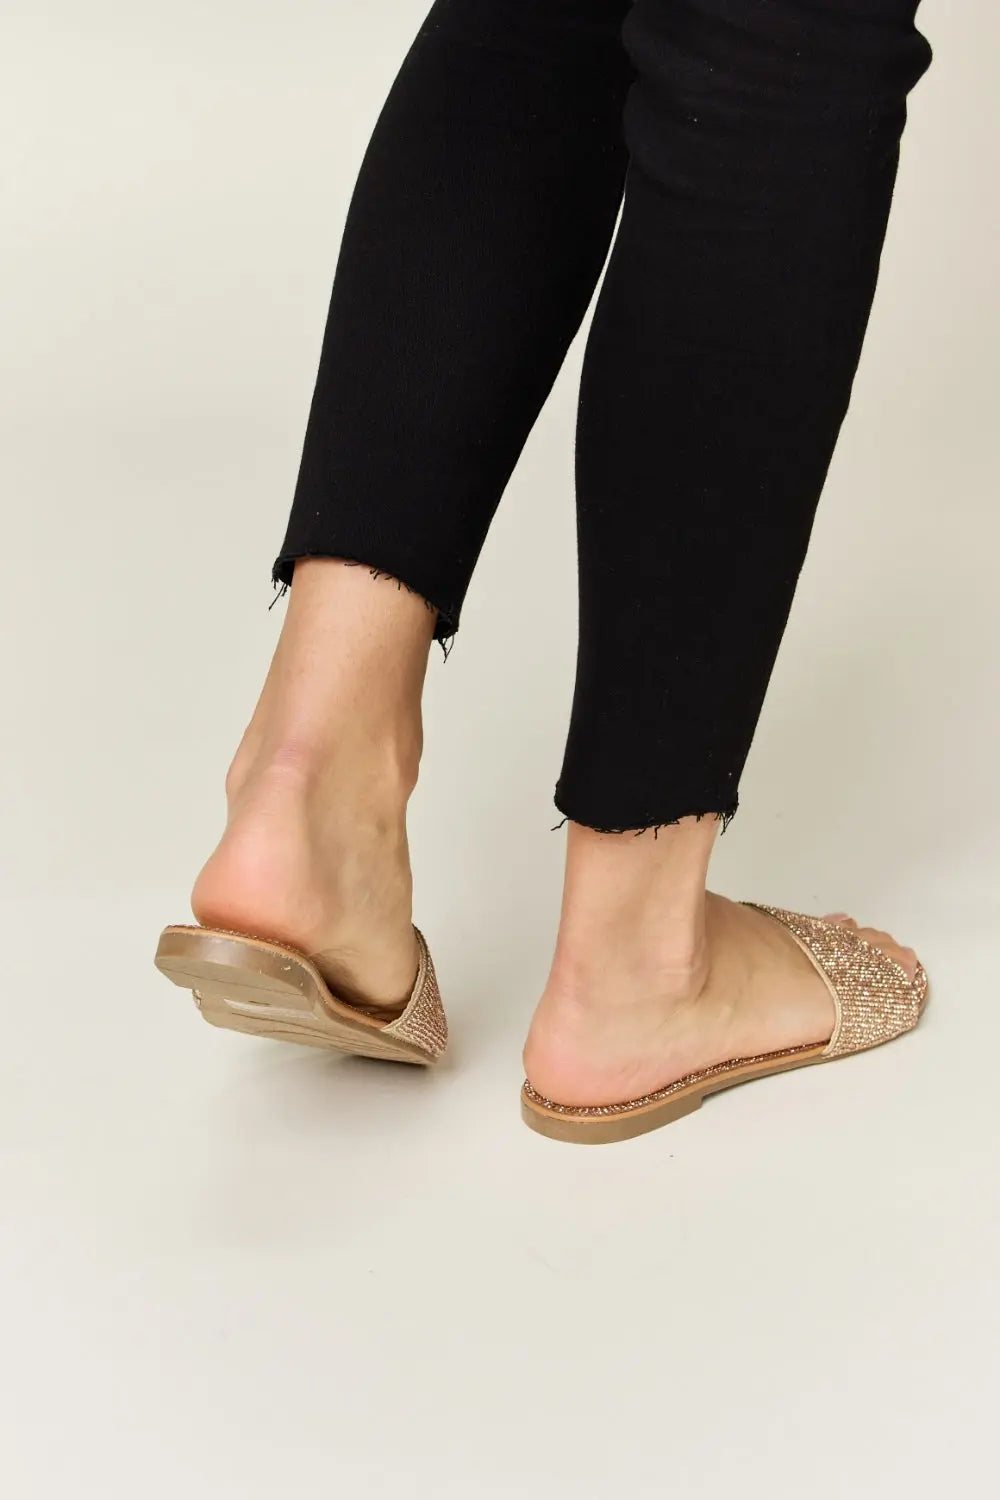 WILD DIVA Rhinestone Open Toe Flat Sandals Trendsi